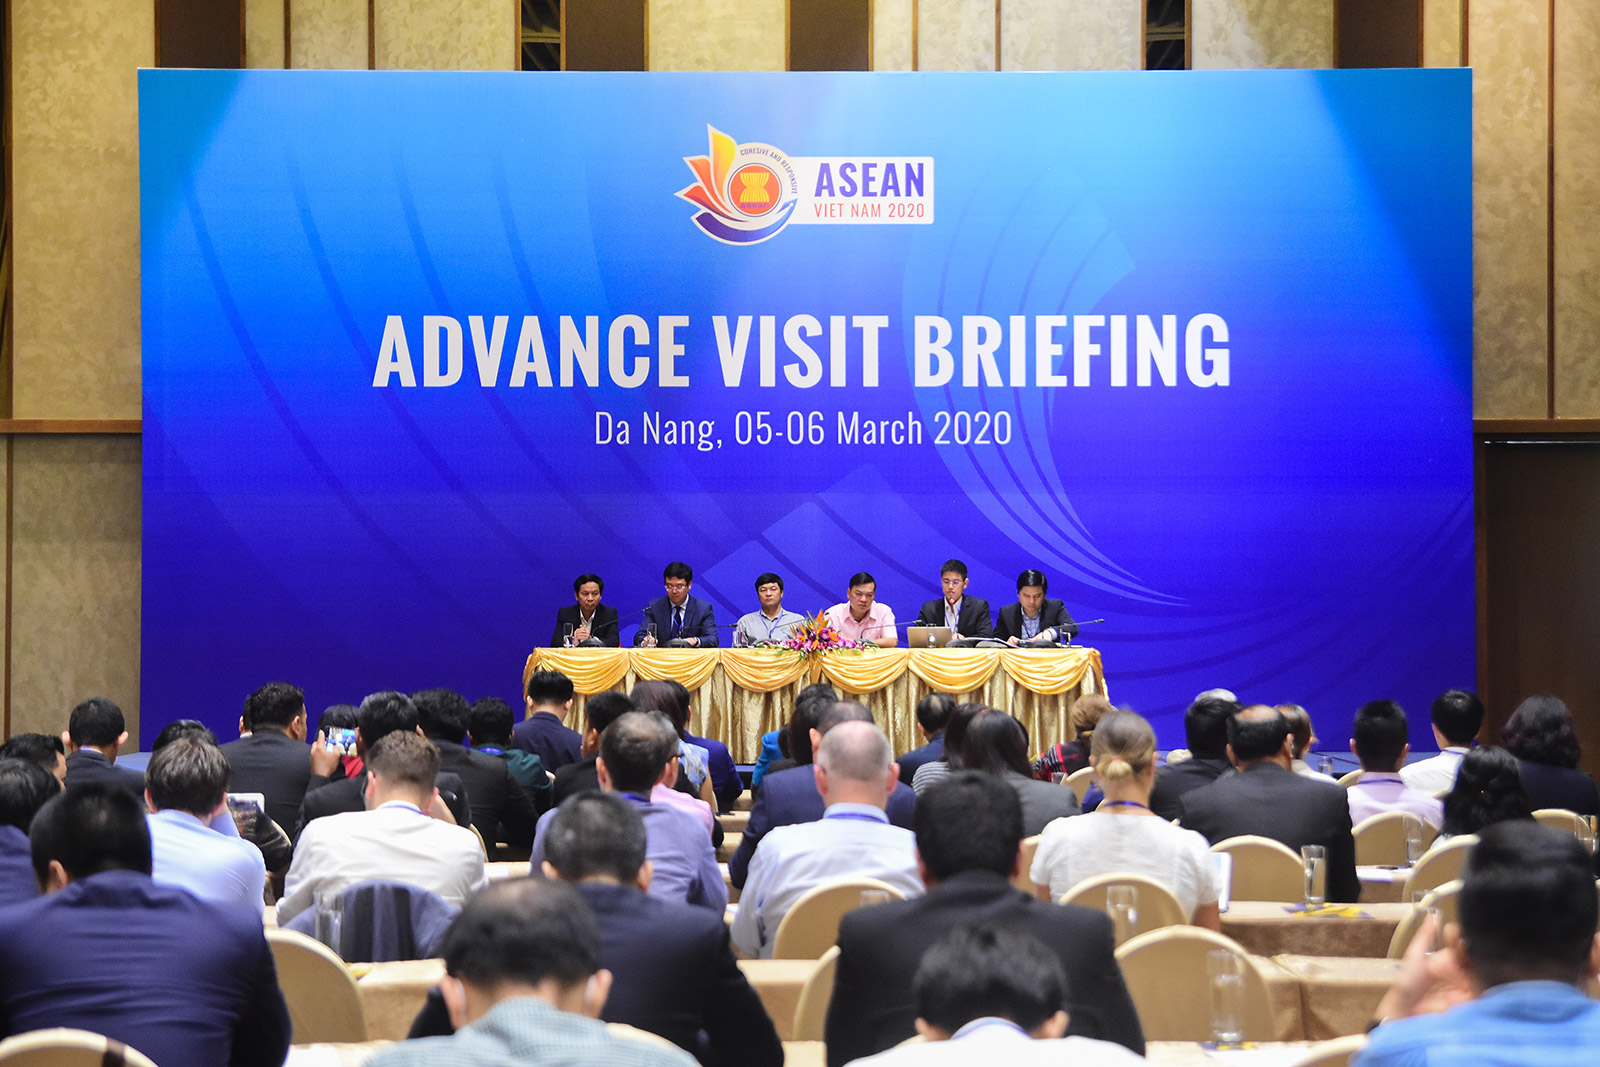 2020 ASEAN SUMMITS IN DANANG: ADVANCE VISIT BRIEFING